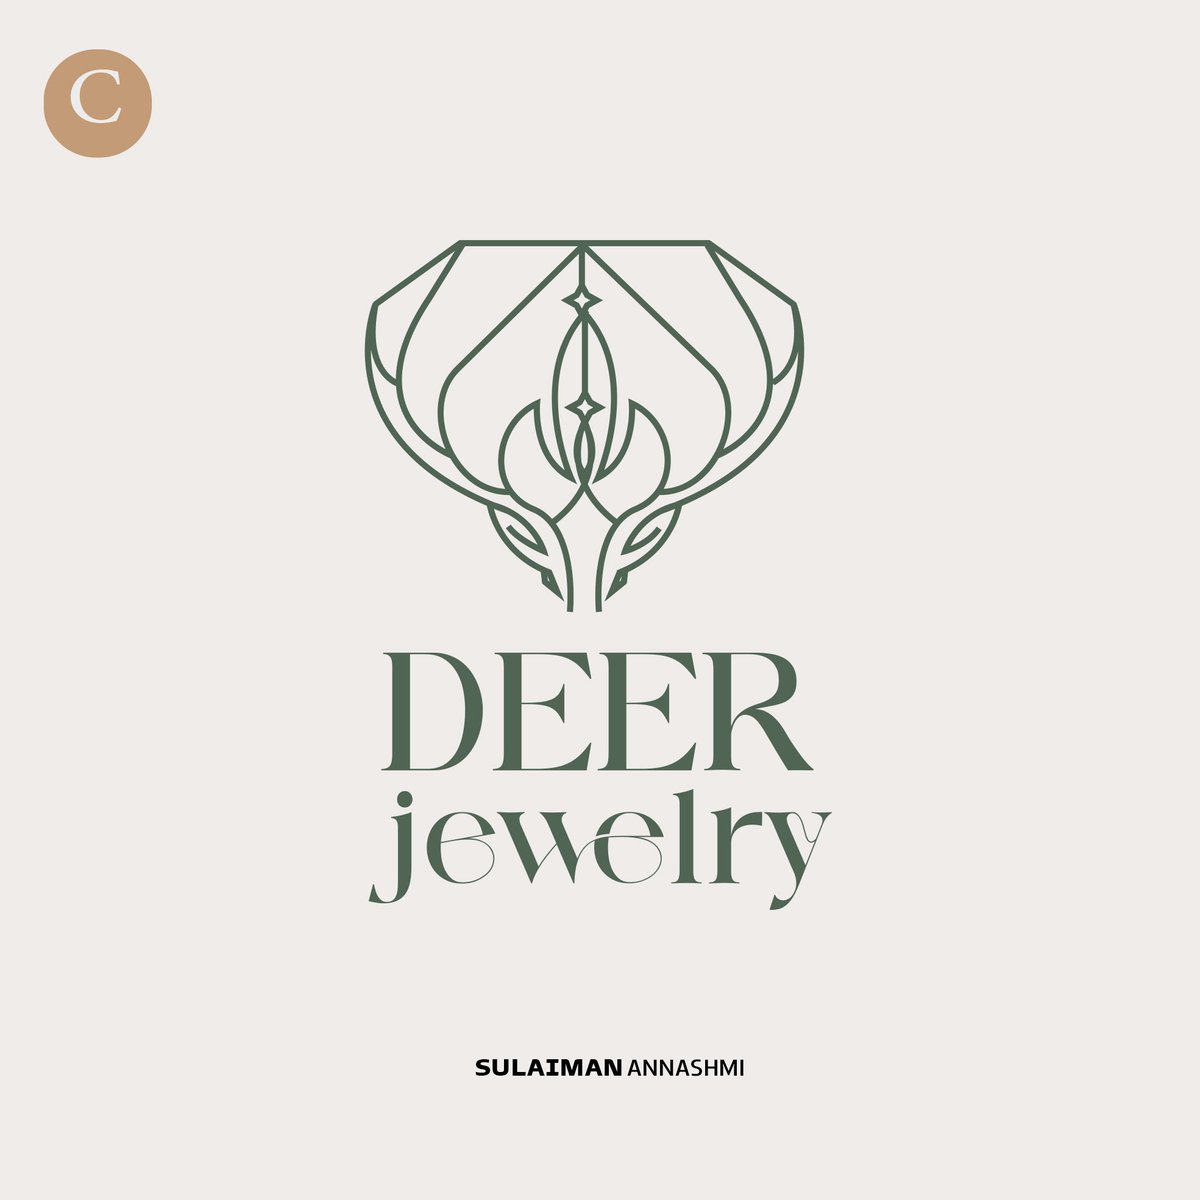 What's the best one ?
.
.
#logo
#Deer #jewelry
#graphicdesign #graphicdesigner #digitalarchive #graphicindex #typography #logo #designinspiration #motiongraphics #designagency #productdesign #identitydesign #visualidentity #branddesigner